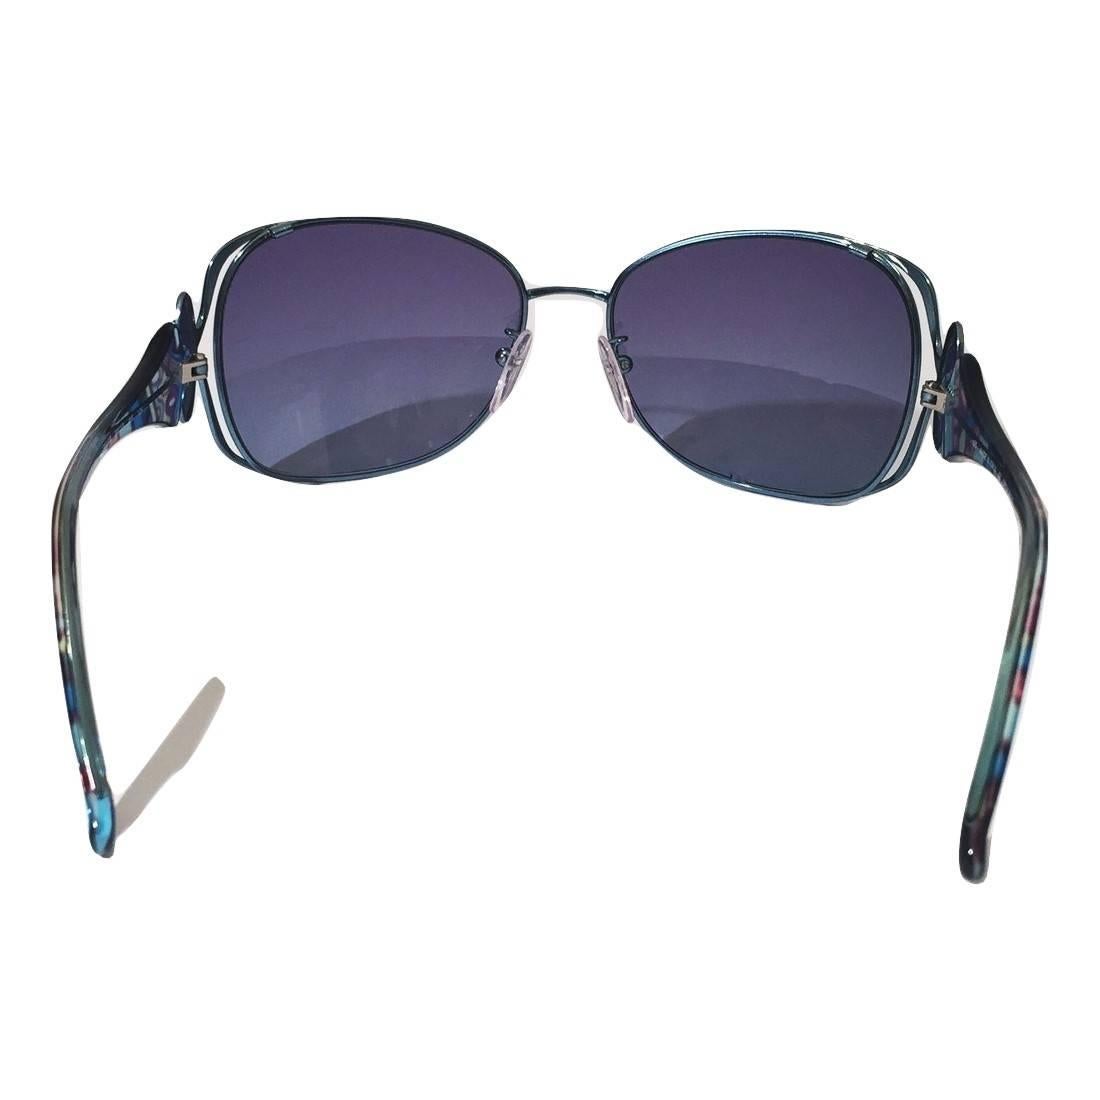 New Emilio Pucci Teal Blue Aviator Sunglasses With Case & Box 6